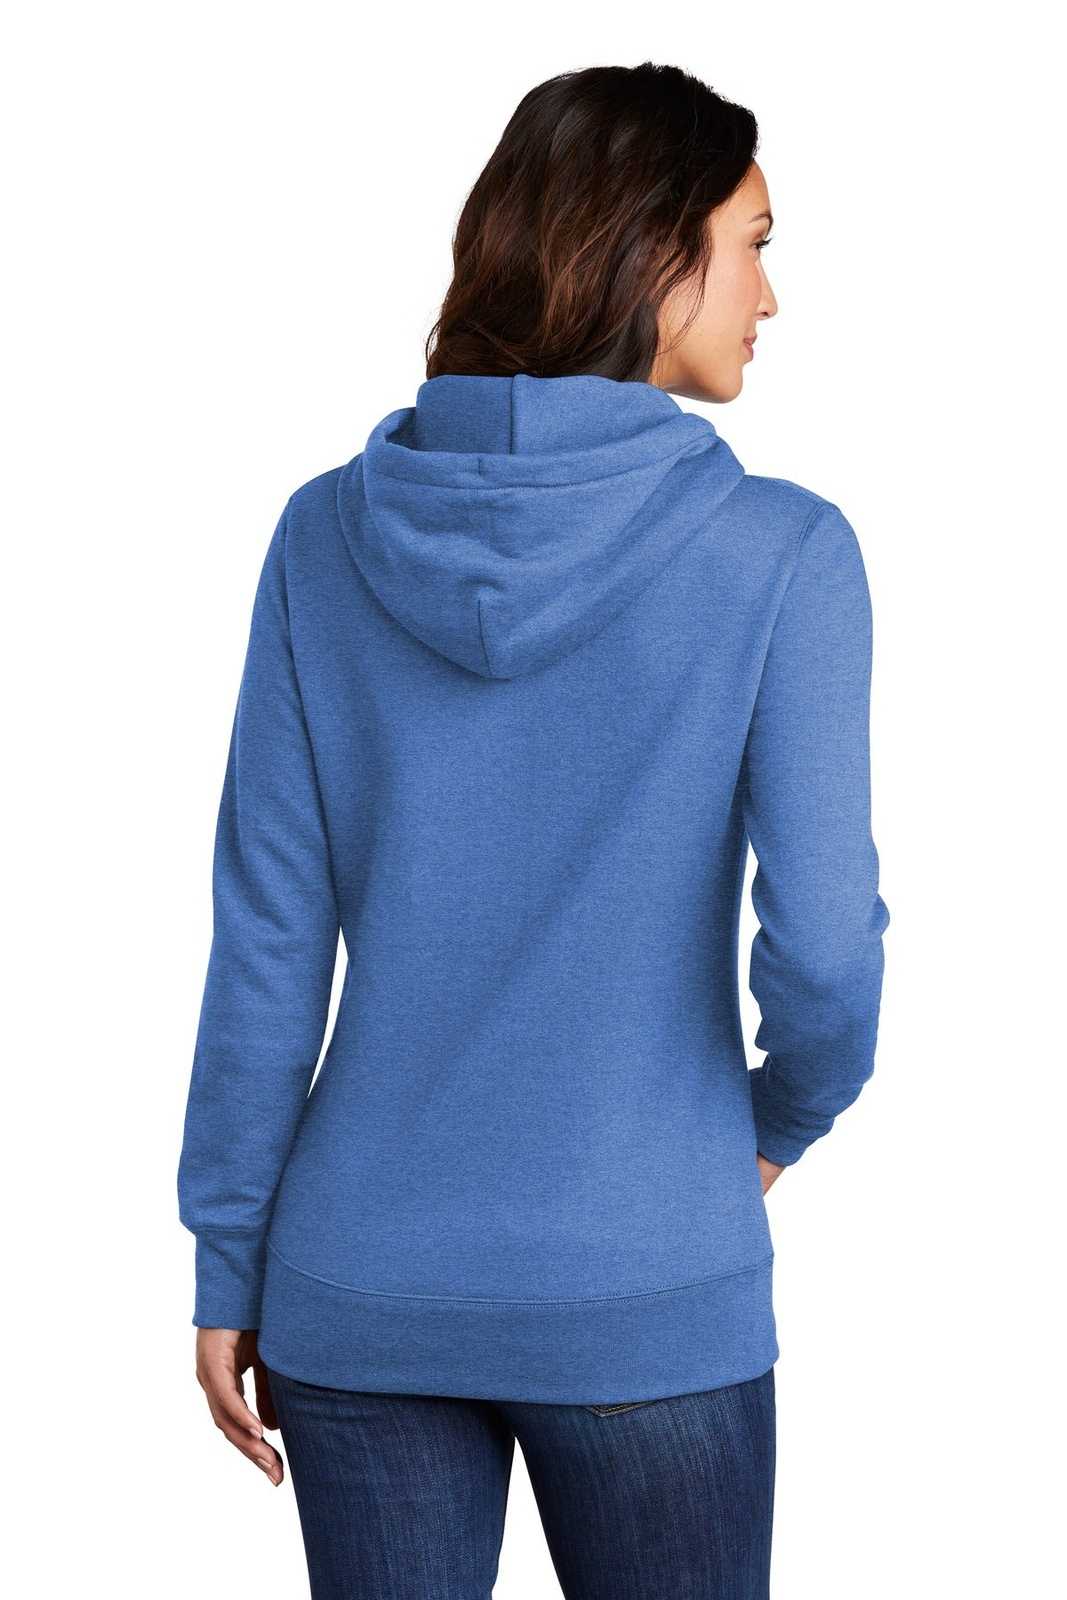 Port & Company LPC78H Ladies Core Fleece Pullover Hooded Sweatshirt - Heather Royal - HIT a Double - 1